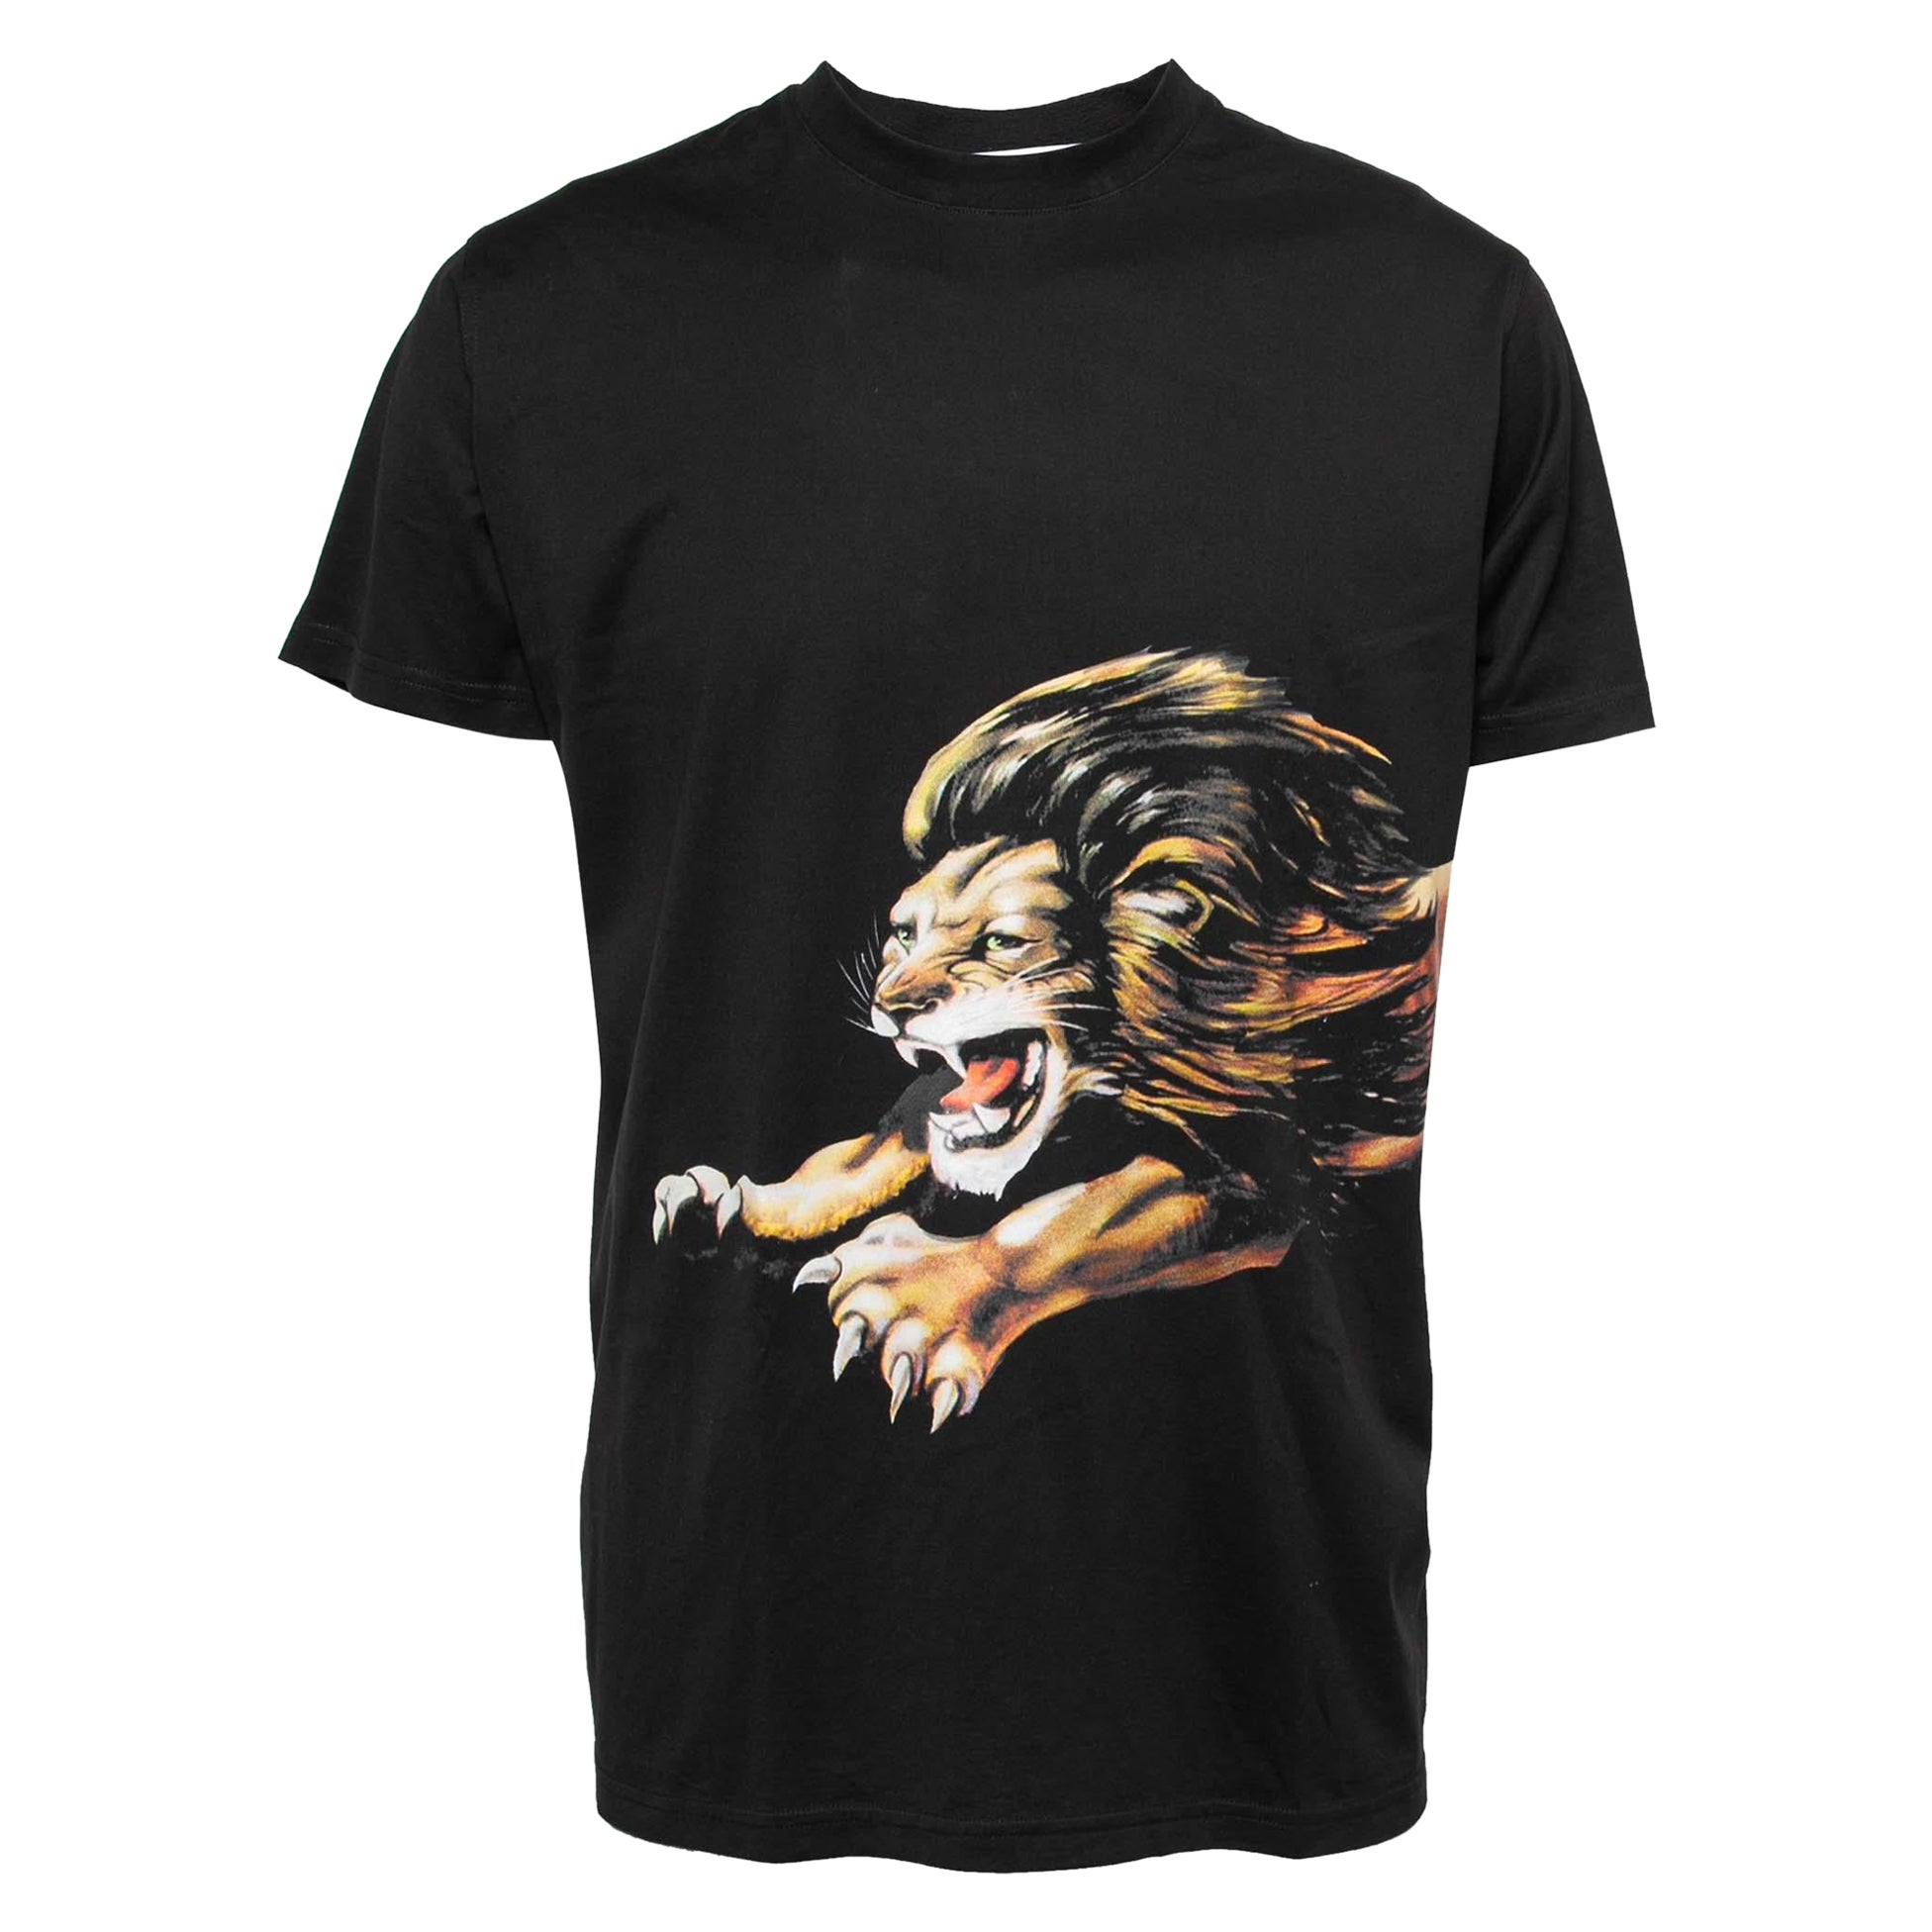 Givenchy Black Cotton Lion Printed Crew Neck T-Shirt XS